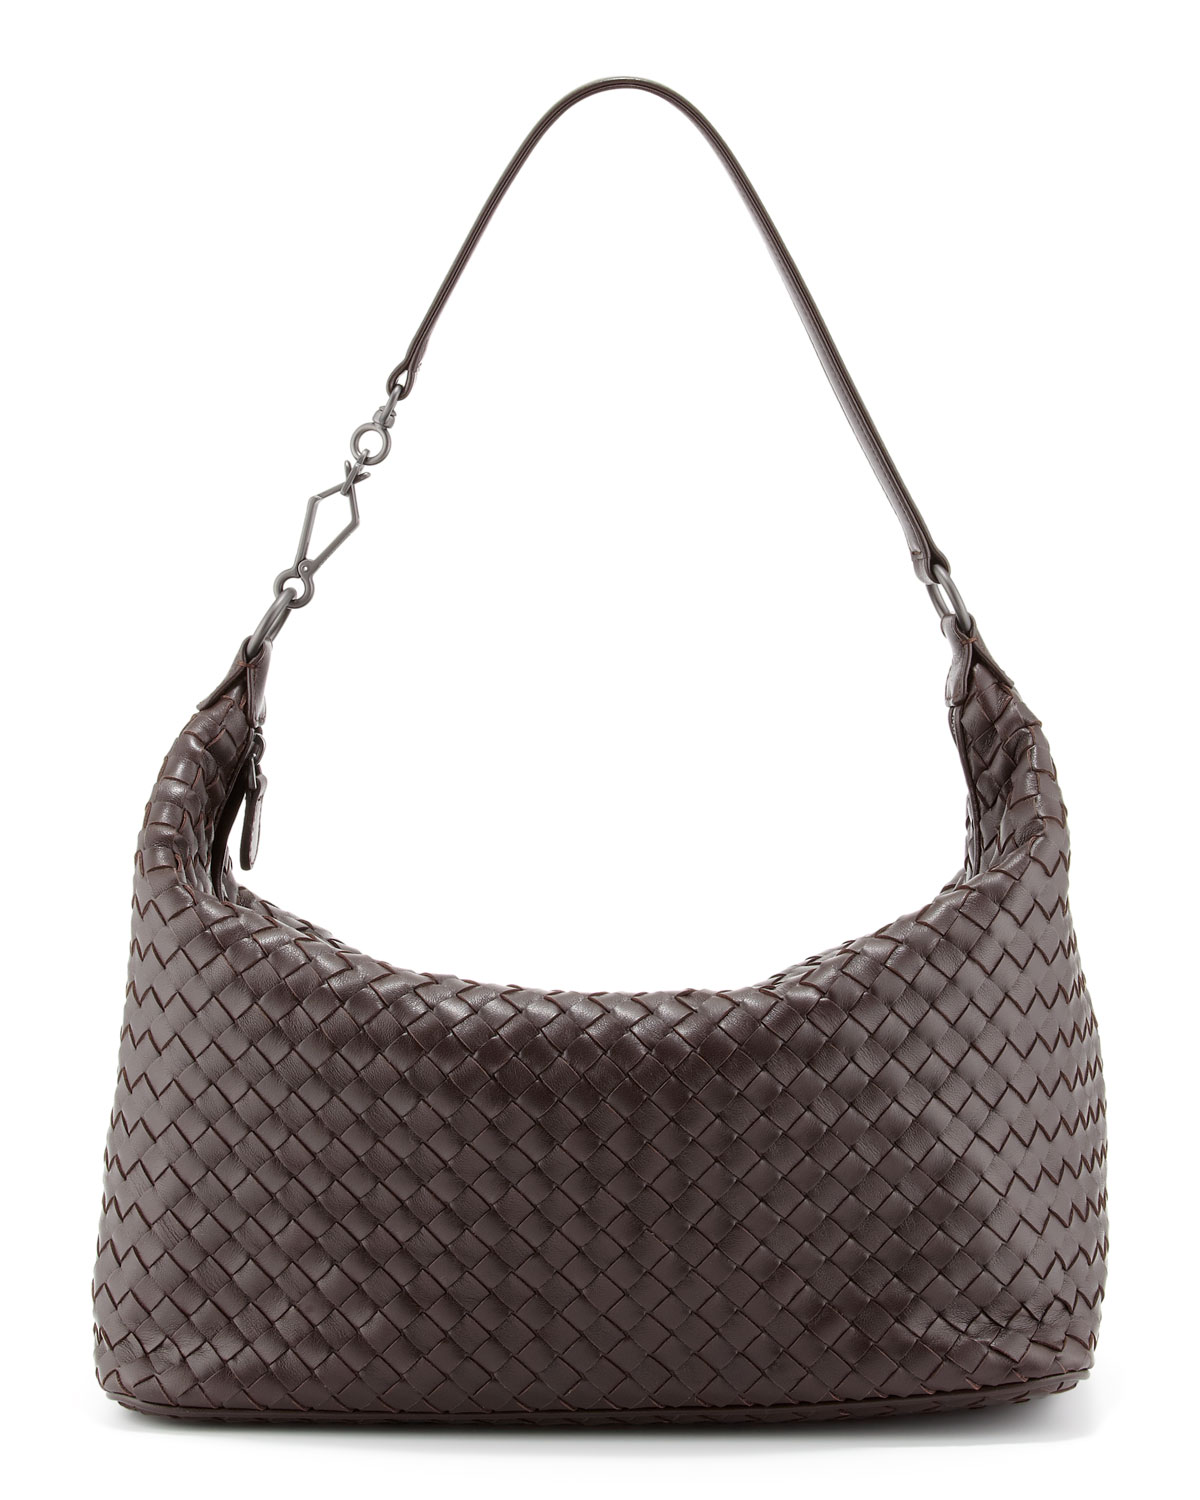 Bottega veneta Woven Leather Shoulder Bag in Brown | Lyst